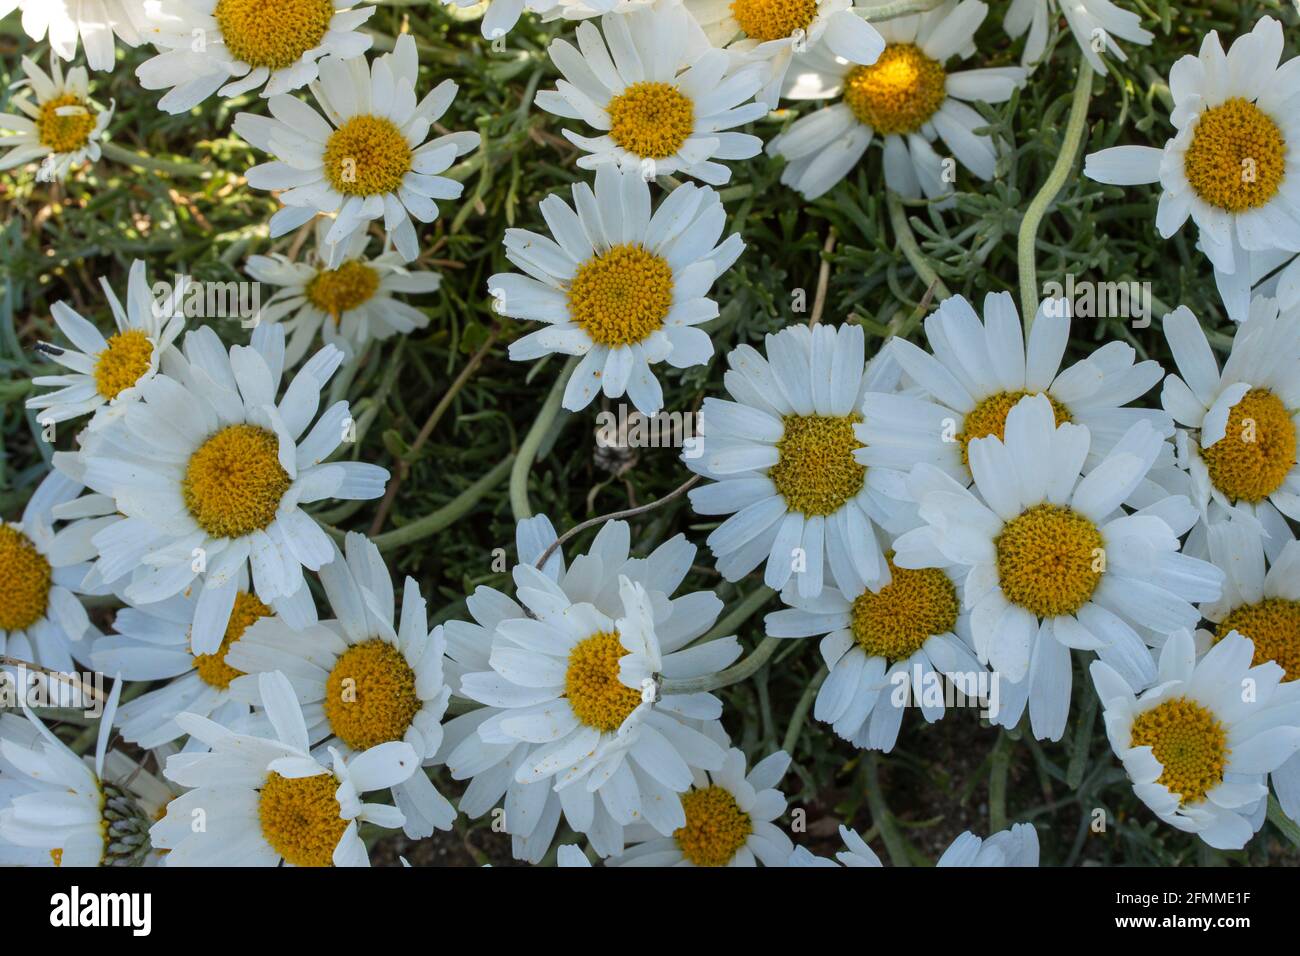 Rhodanthemum hosmariense, Moroccan daisy, flowering plant, family Asteraceae Stock Photo